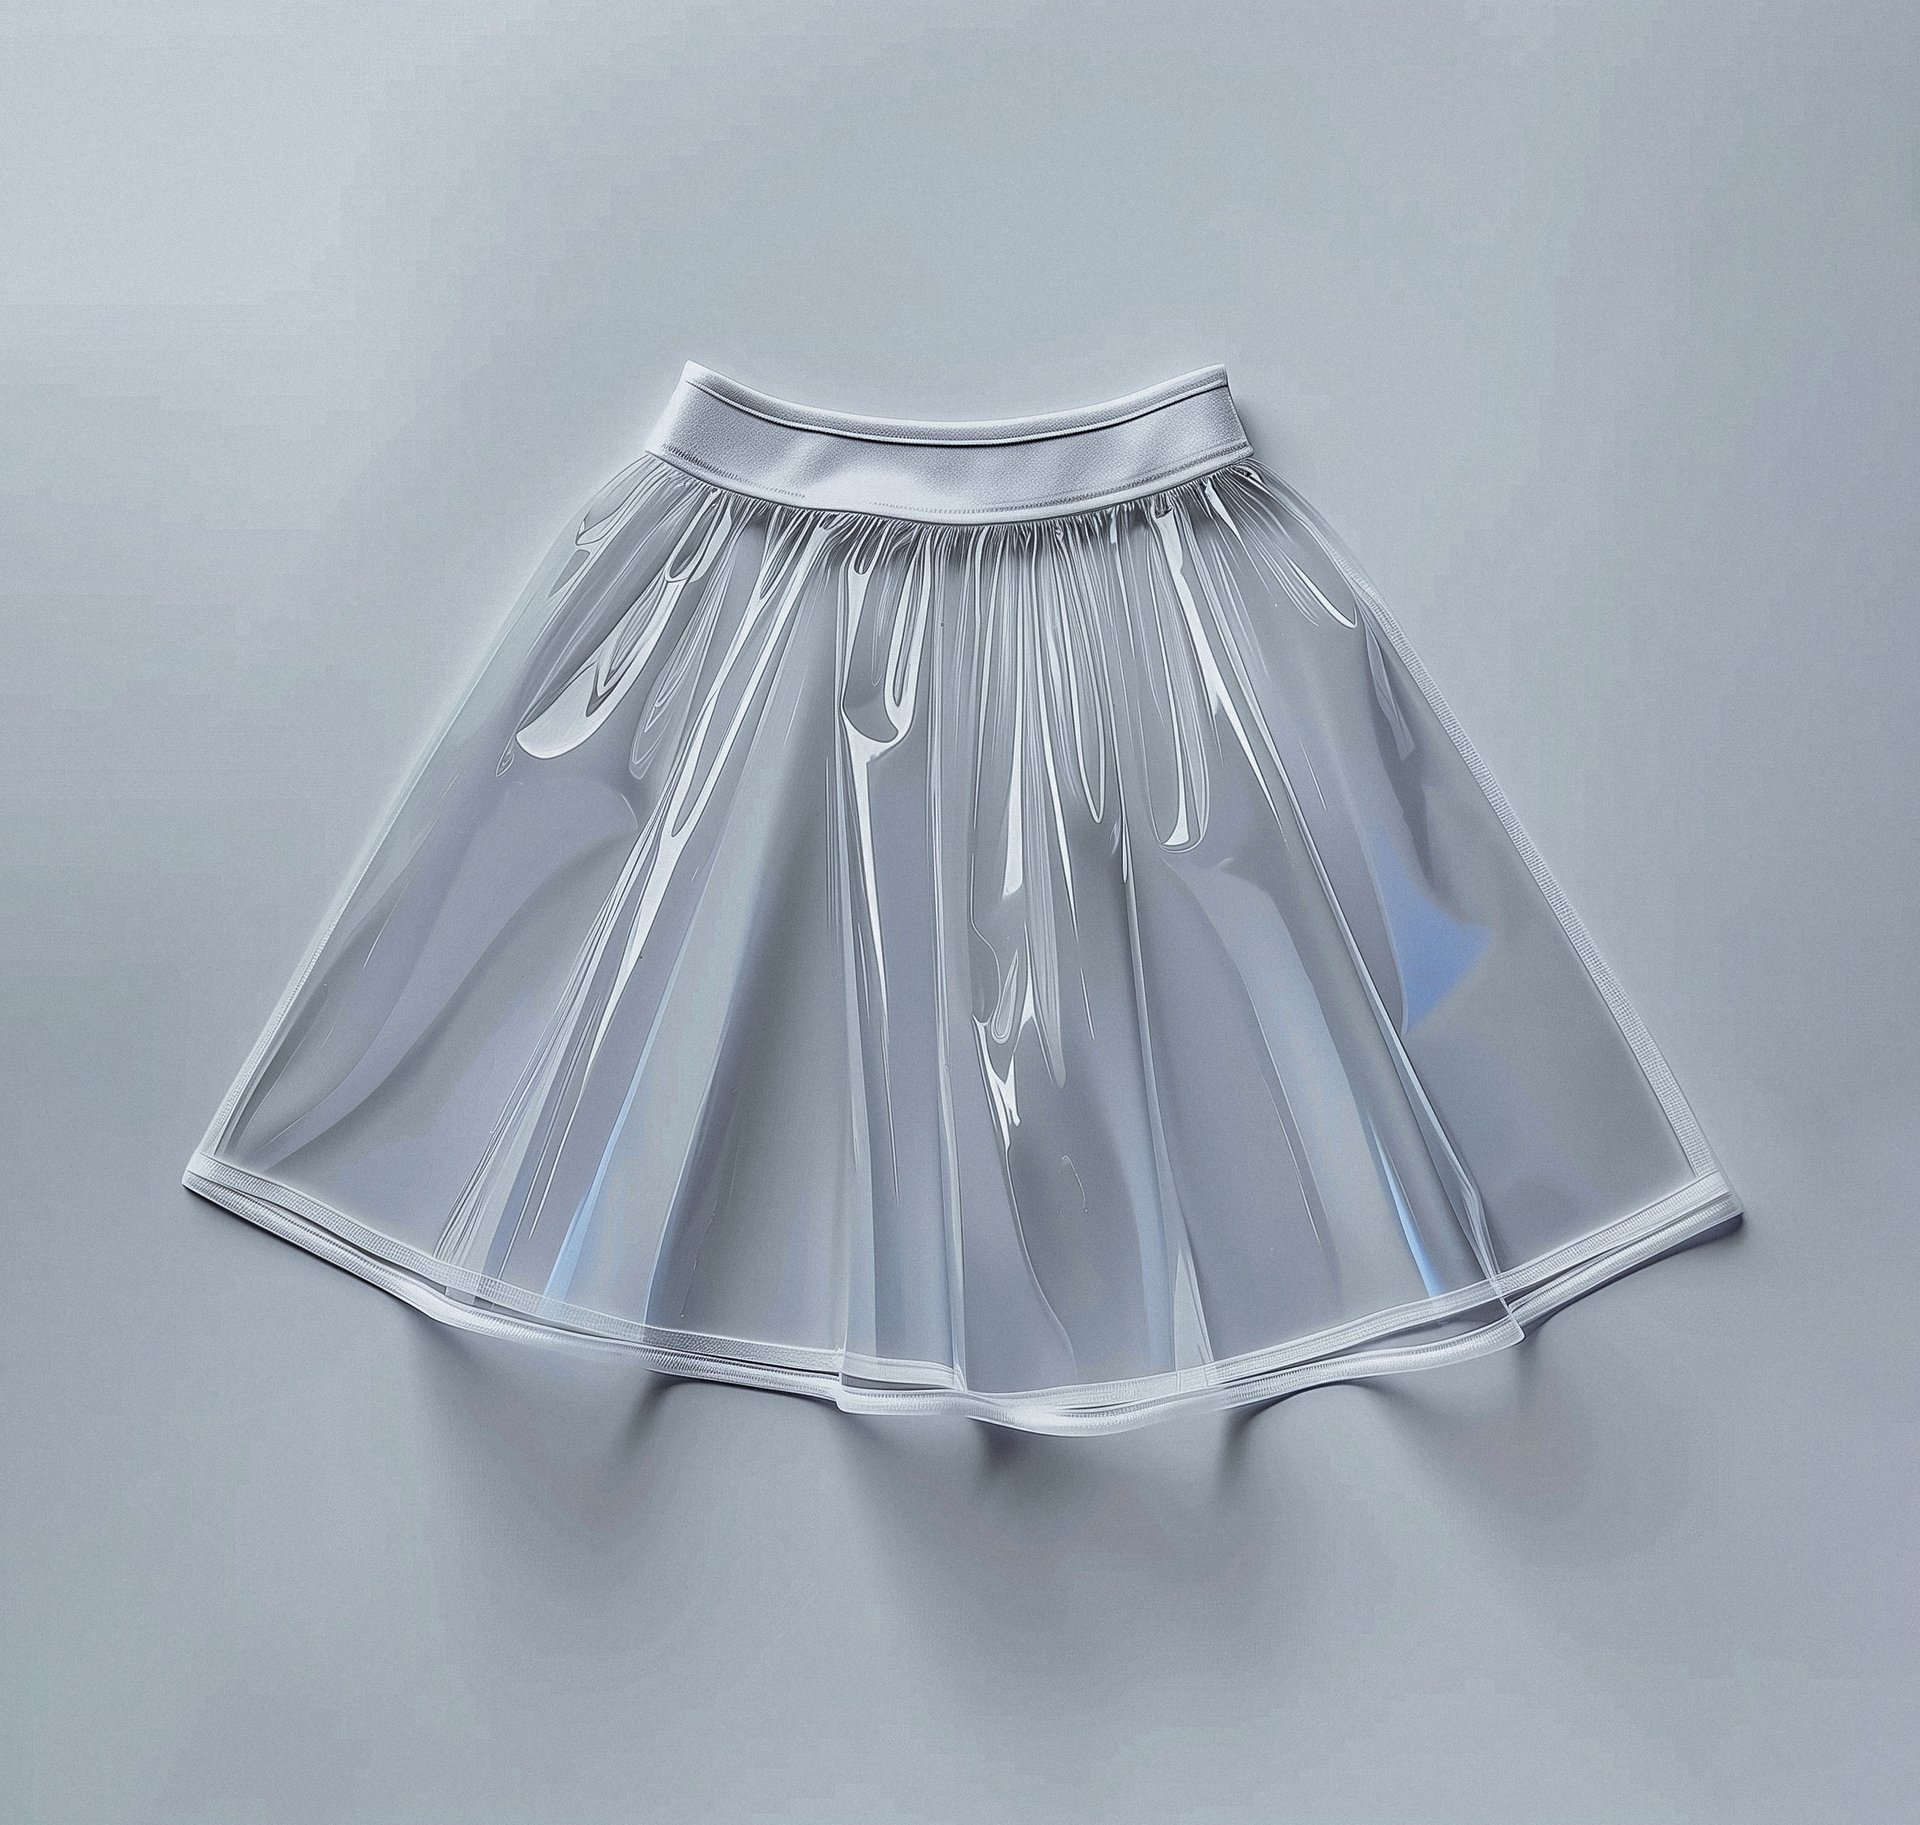 Transparent skirt